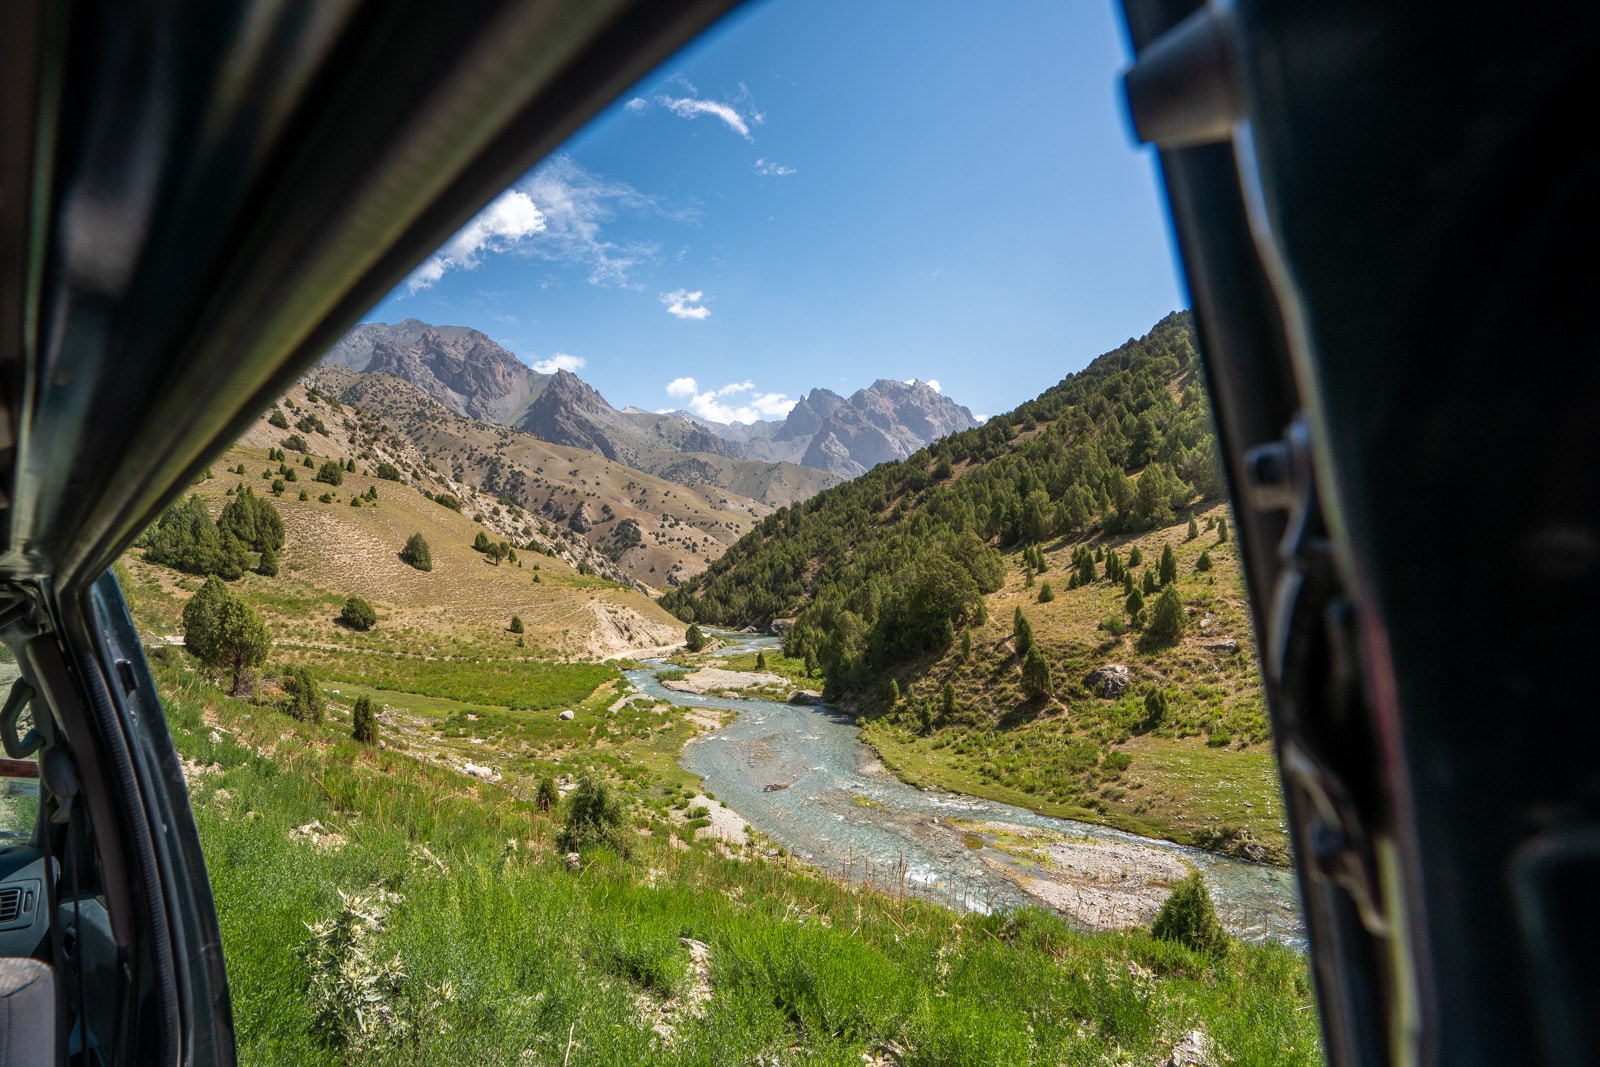 View from van window of Tajikistan's Fann Mountains as travelers drive overland